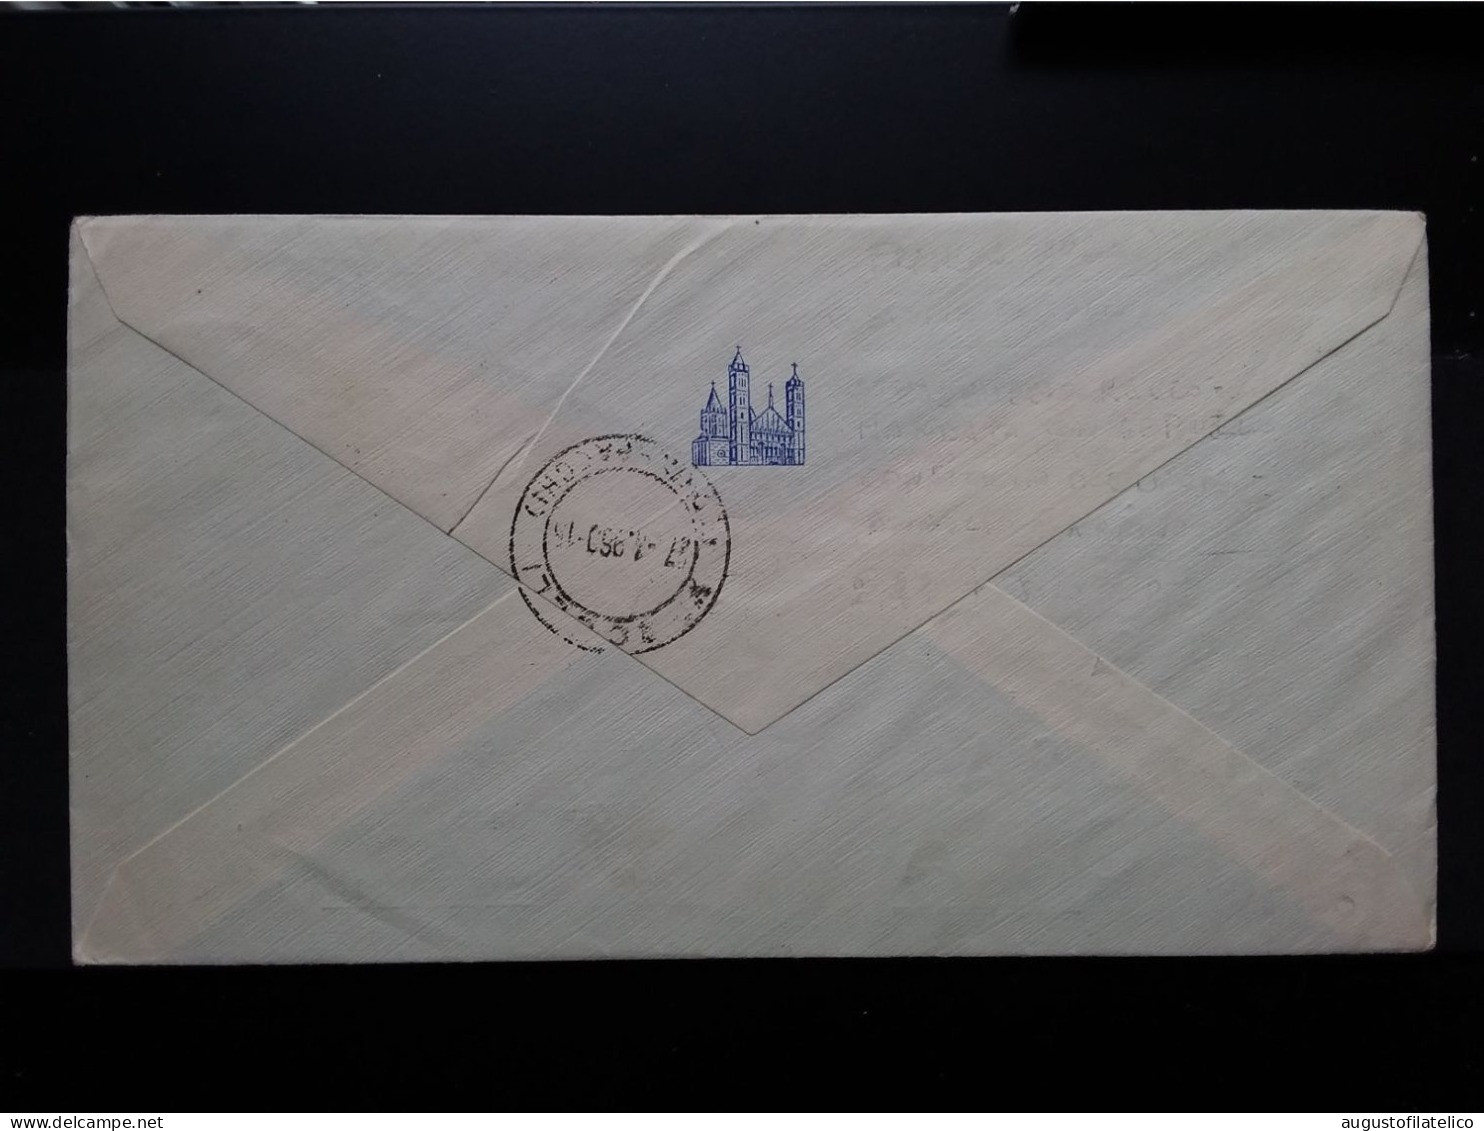 FRANCIA 1960 - Strasburgo - Consiglio D'Europa Su Raccomandata Viaggiata + Spese Postali - Storia Postale